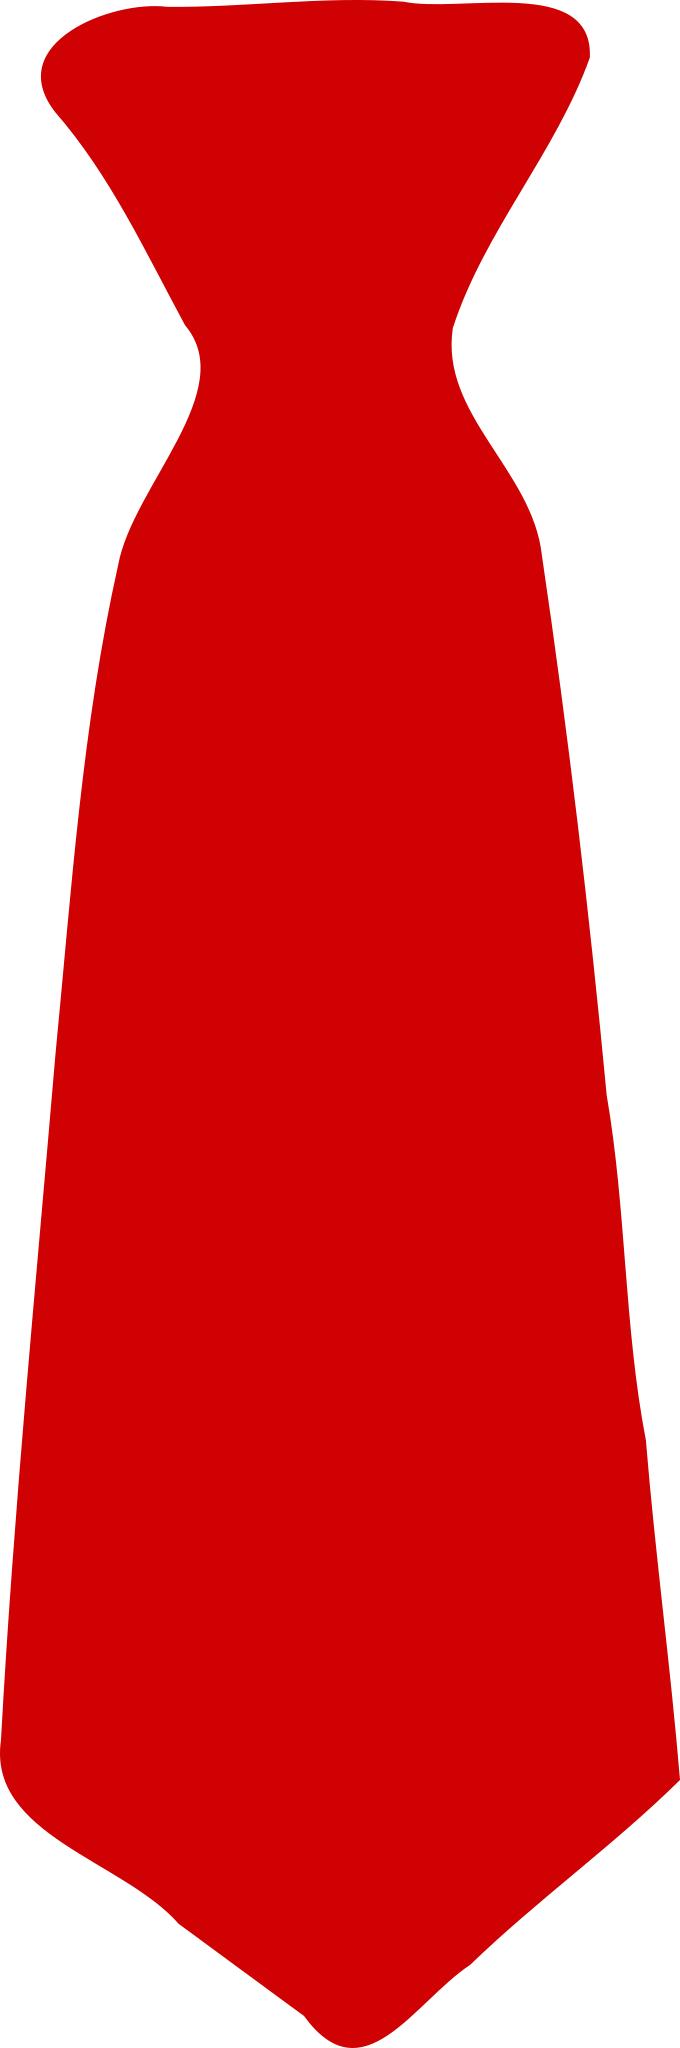 Красный галстук шаблон